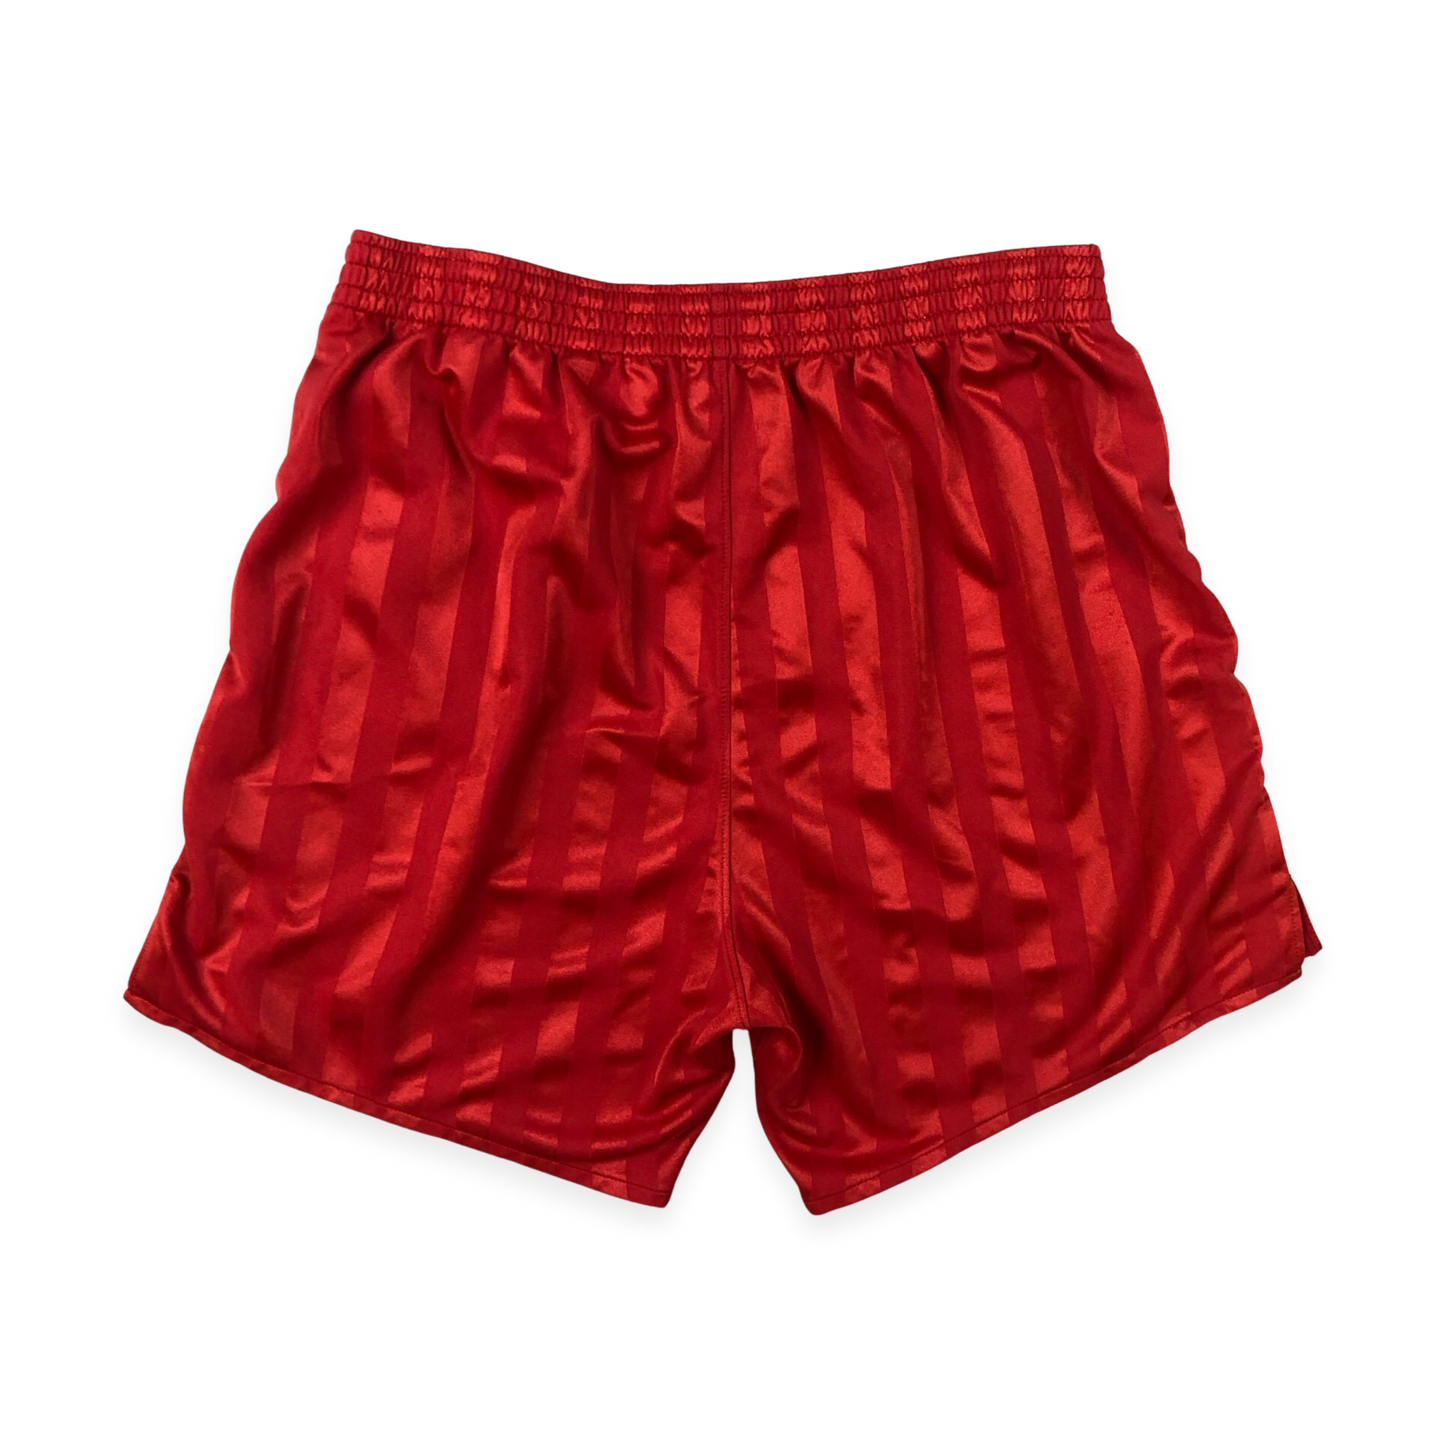 Vintage Asics Red Sports Shorts M